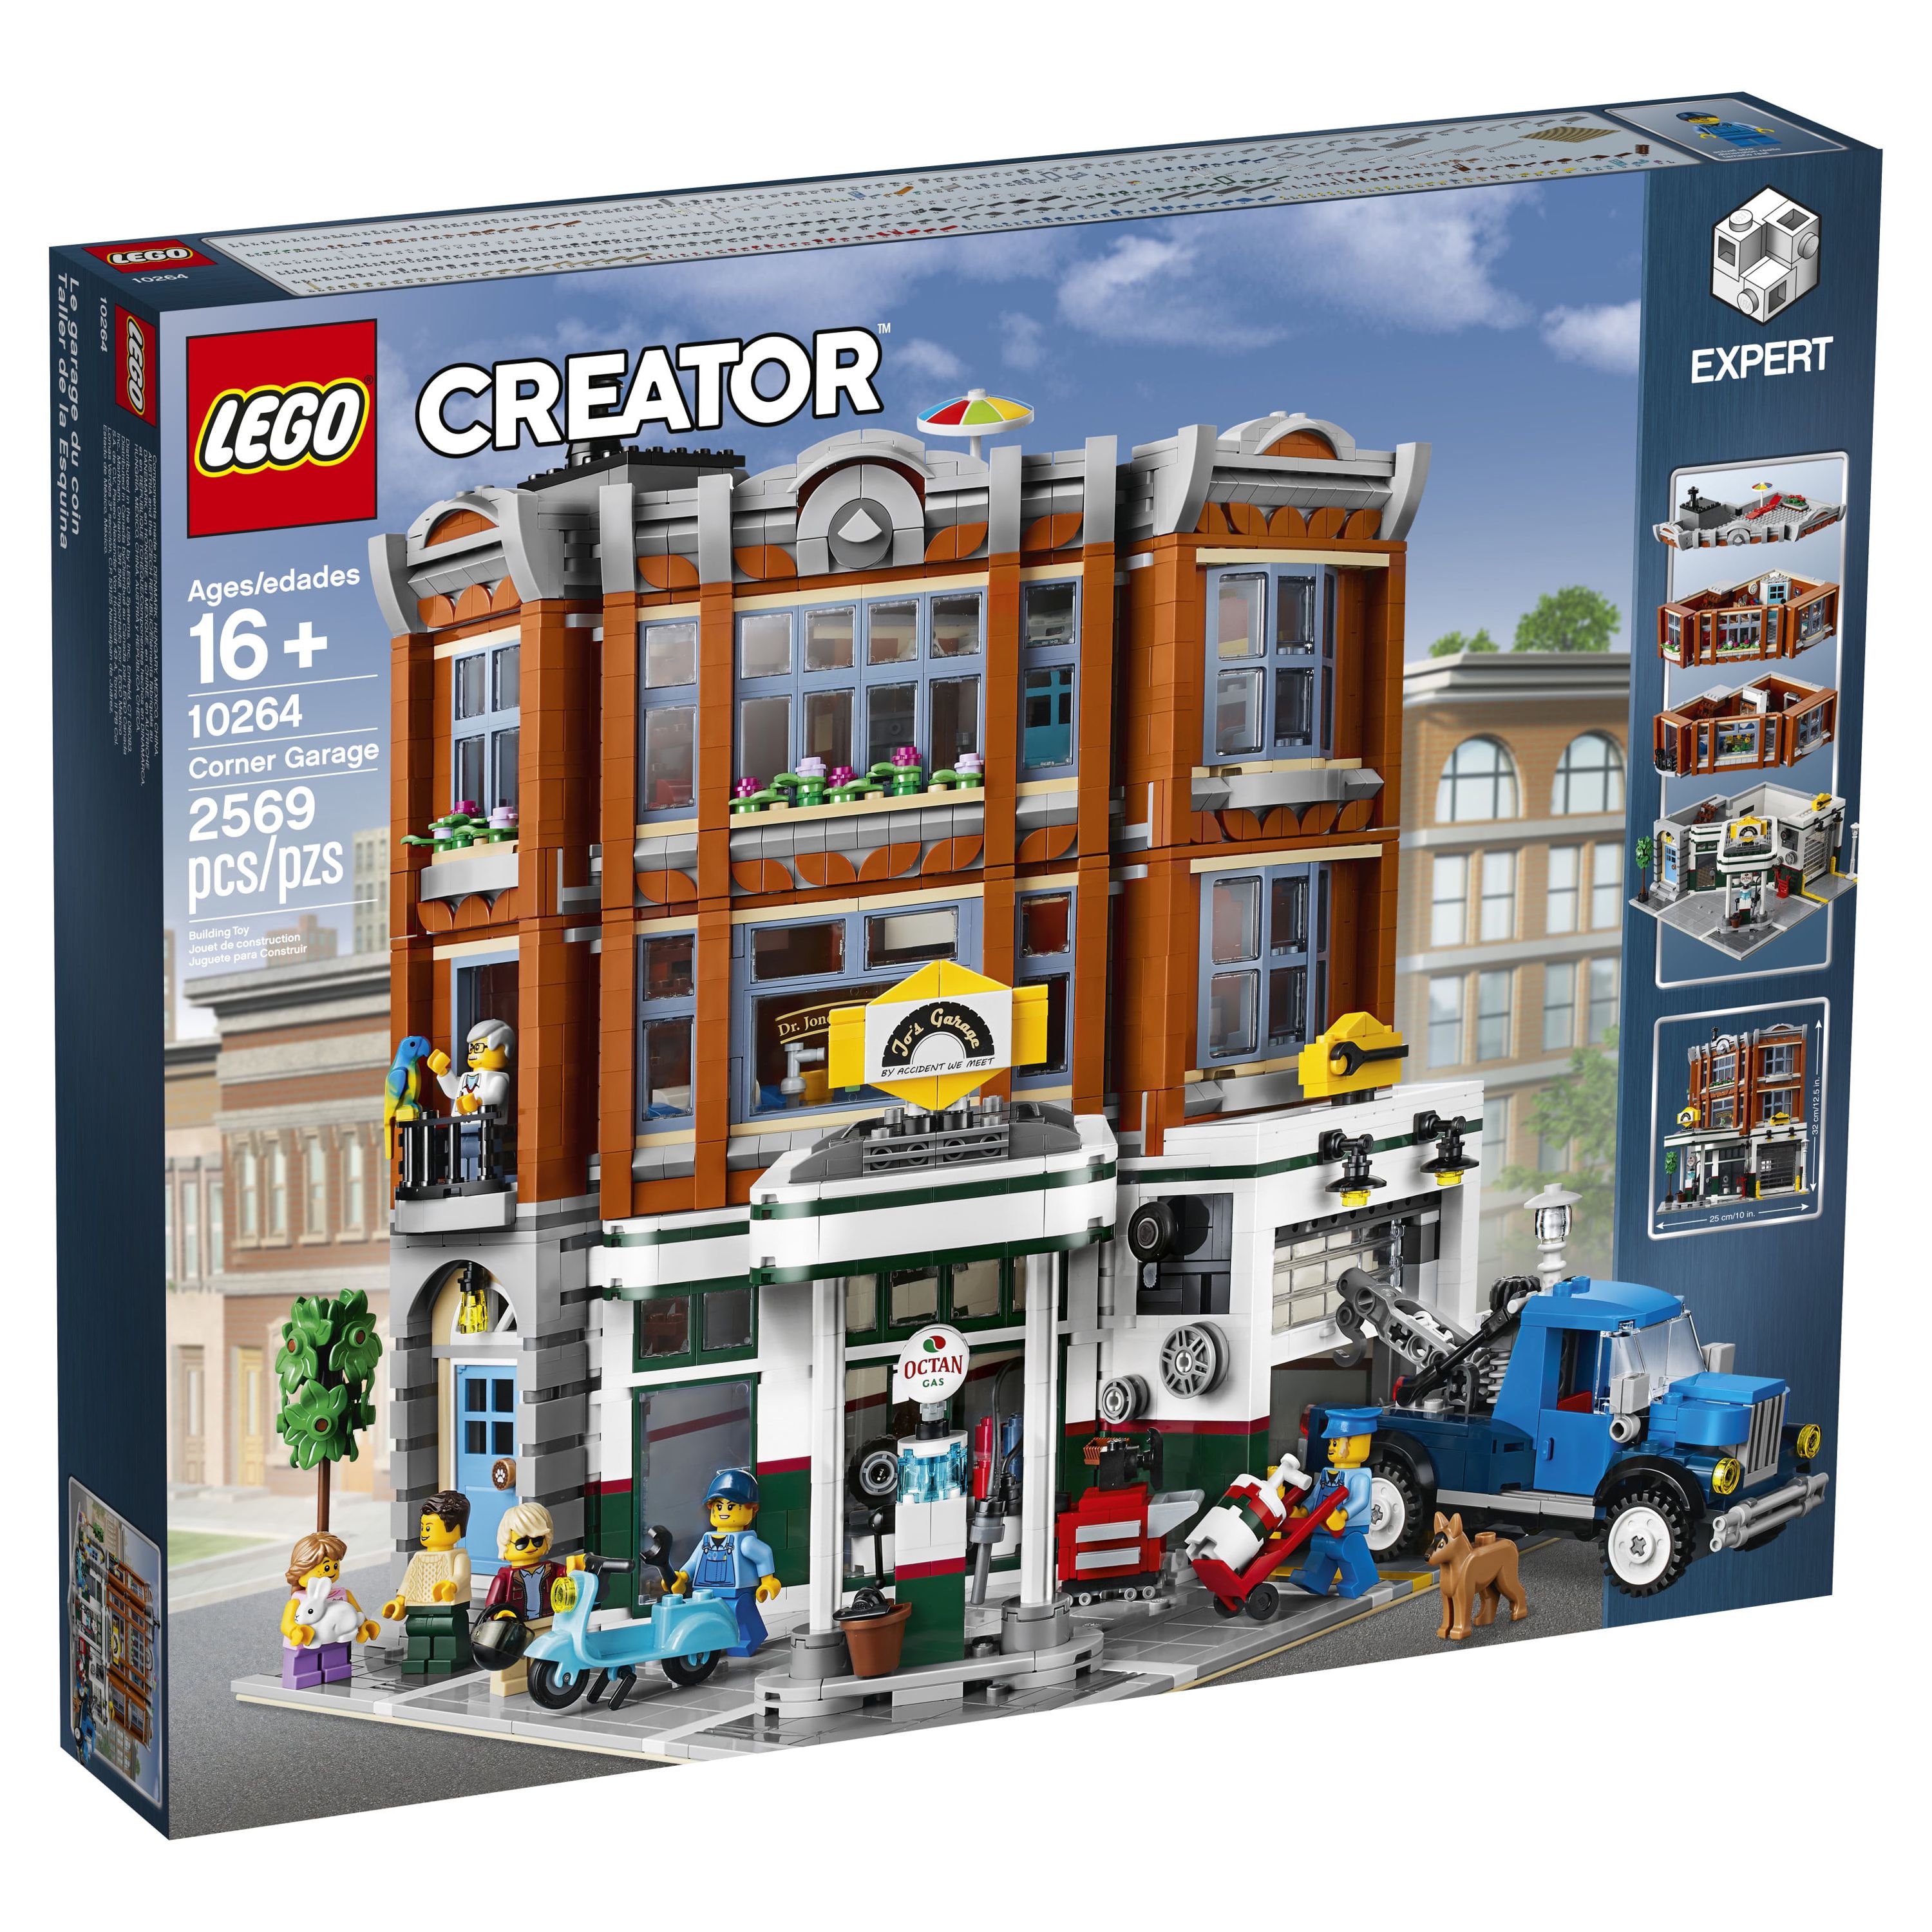 LEGO Creator Expert Corner Garage 10264 Building Set (2,569 Pieces) - image 3 of 4